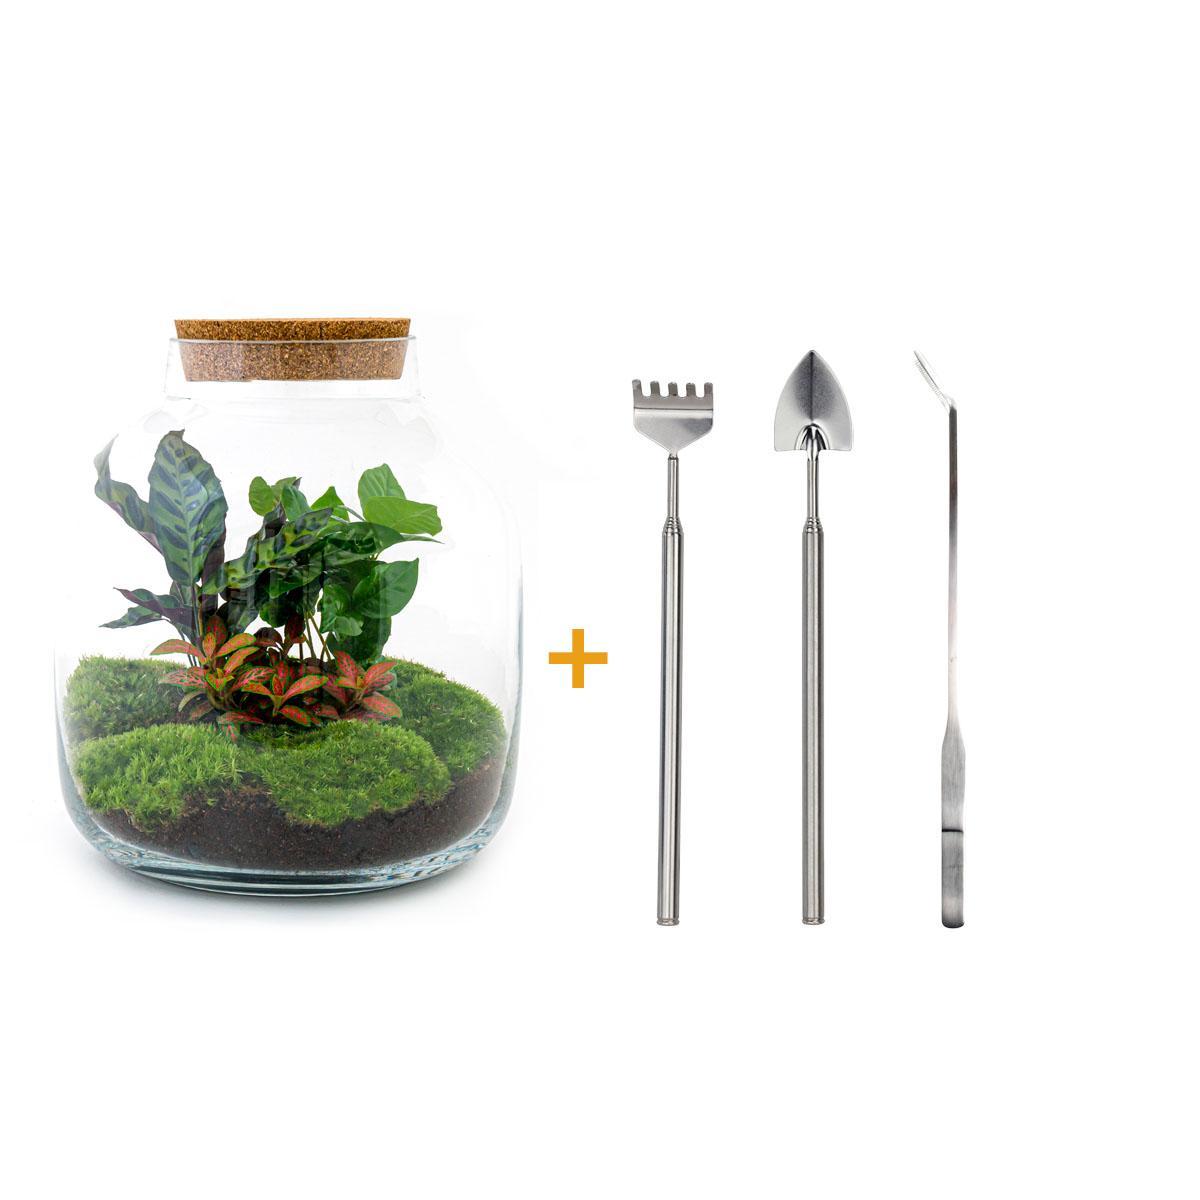 DIY terrarium - Billie Botanical - ↑ 30 cm + Rake + Shovel + Tweezer